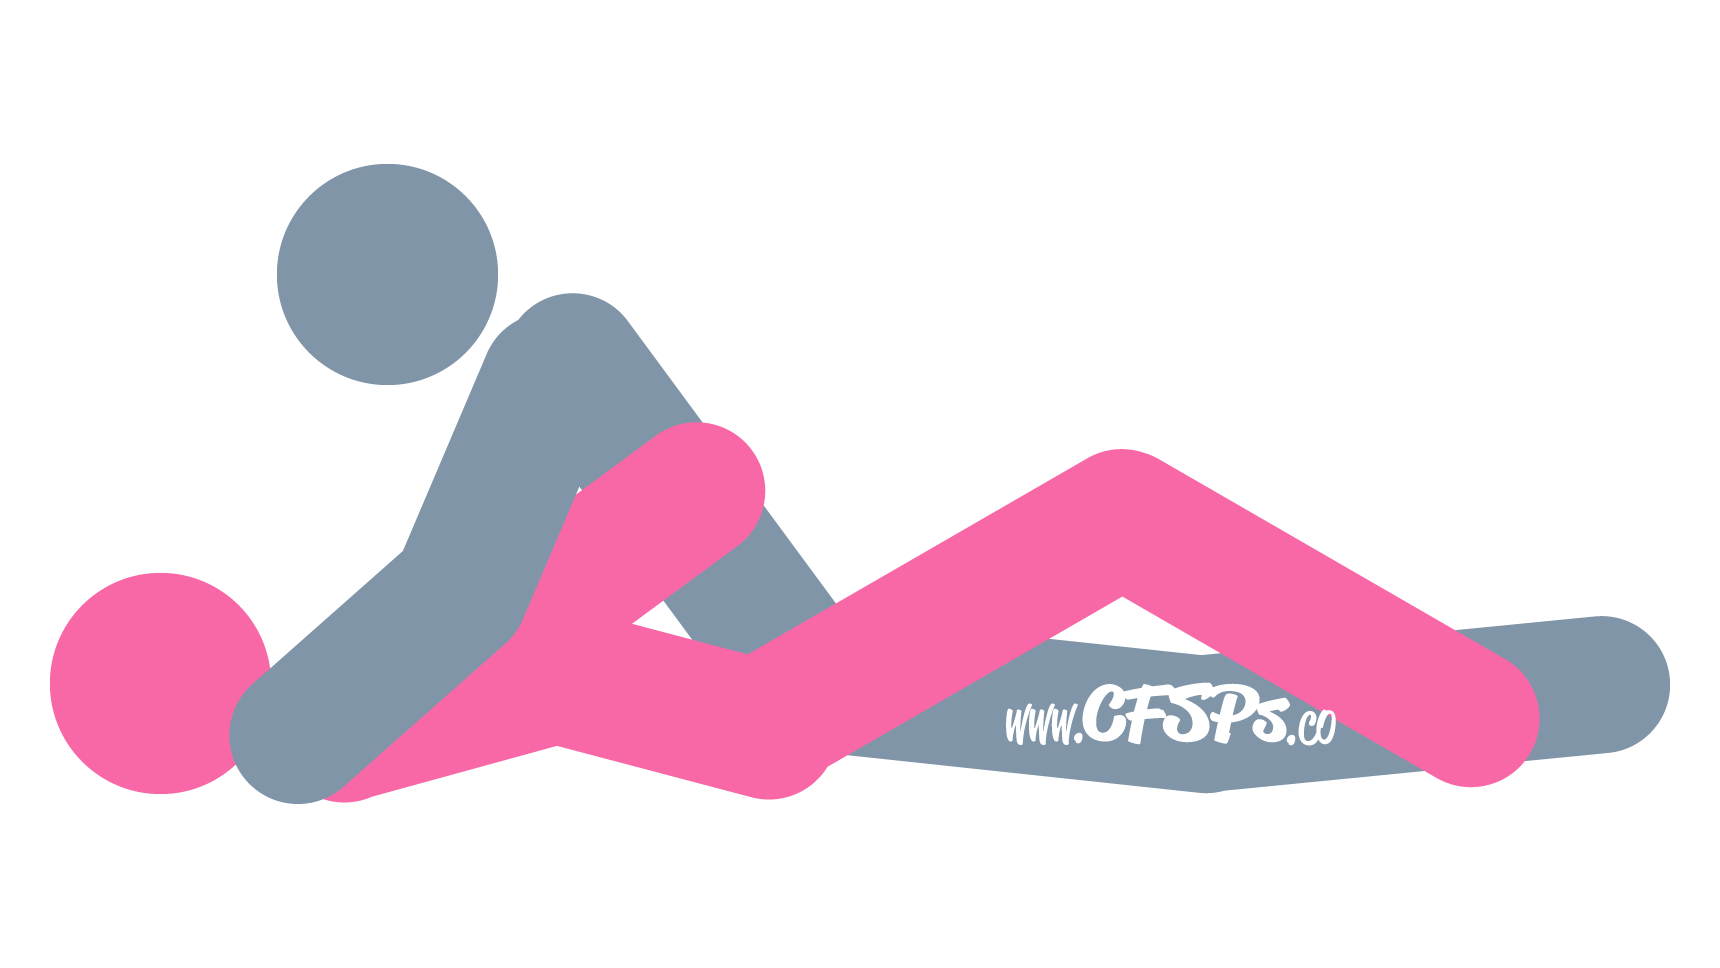 Super Missionary Sex Position Illustration